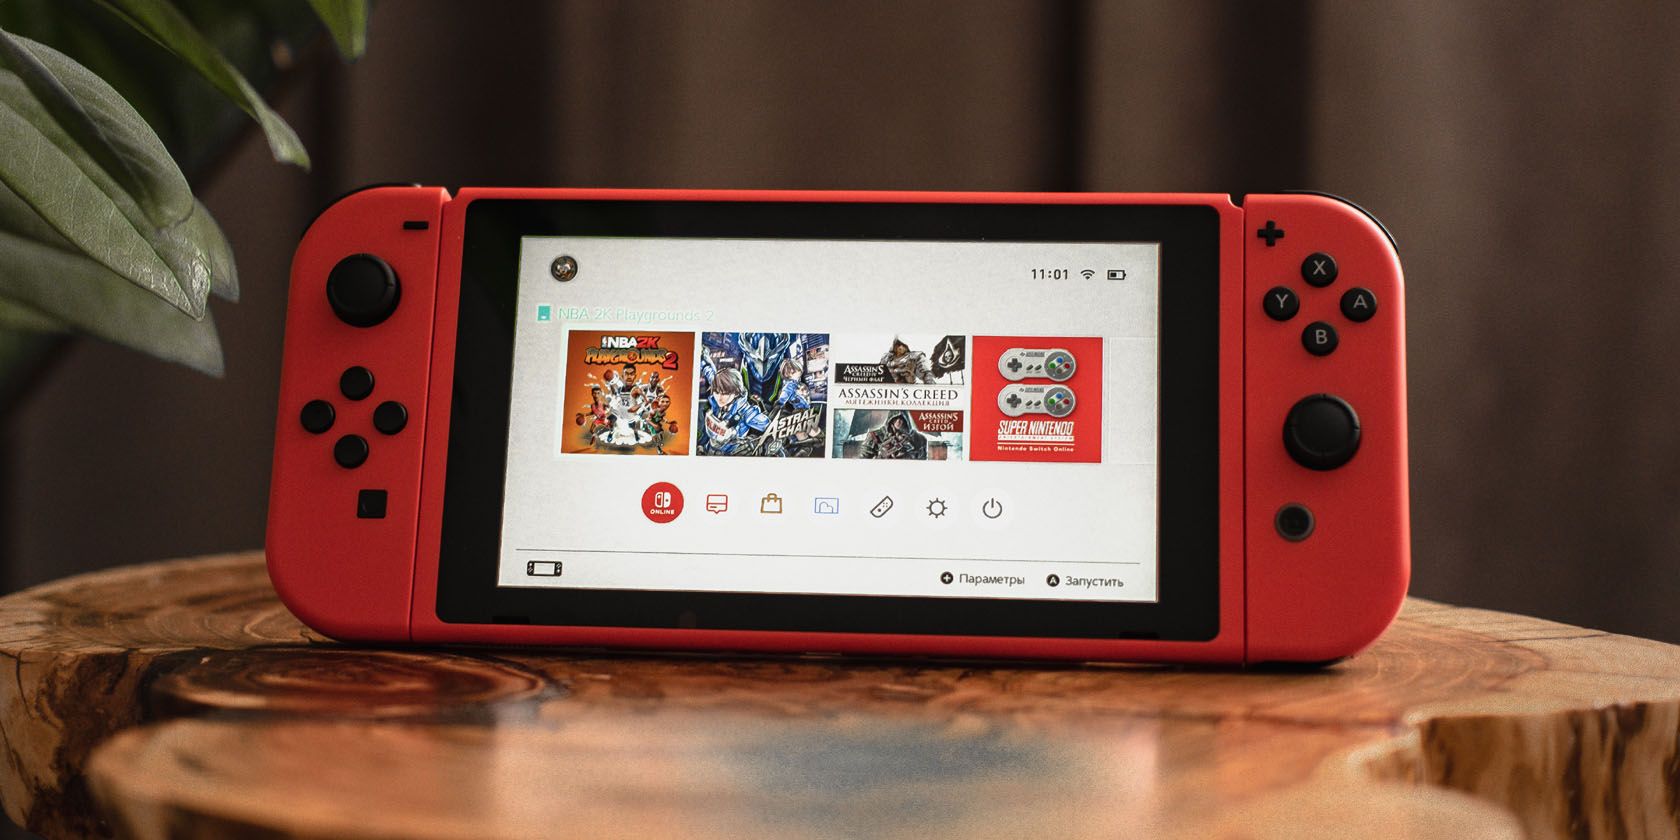 Nintendo Switch Lite Reviews, Pros and Cons